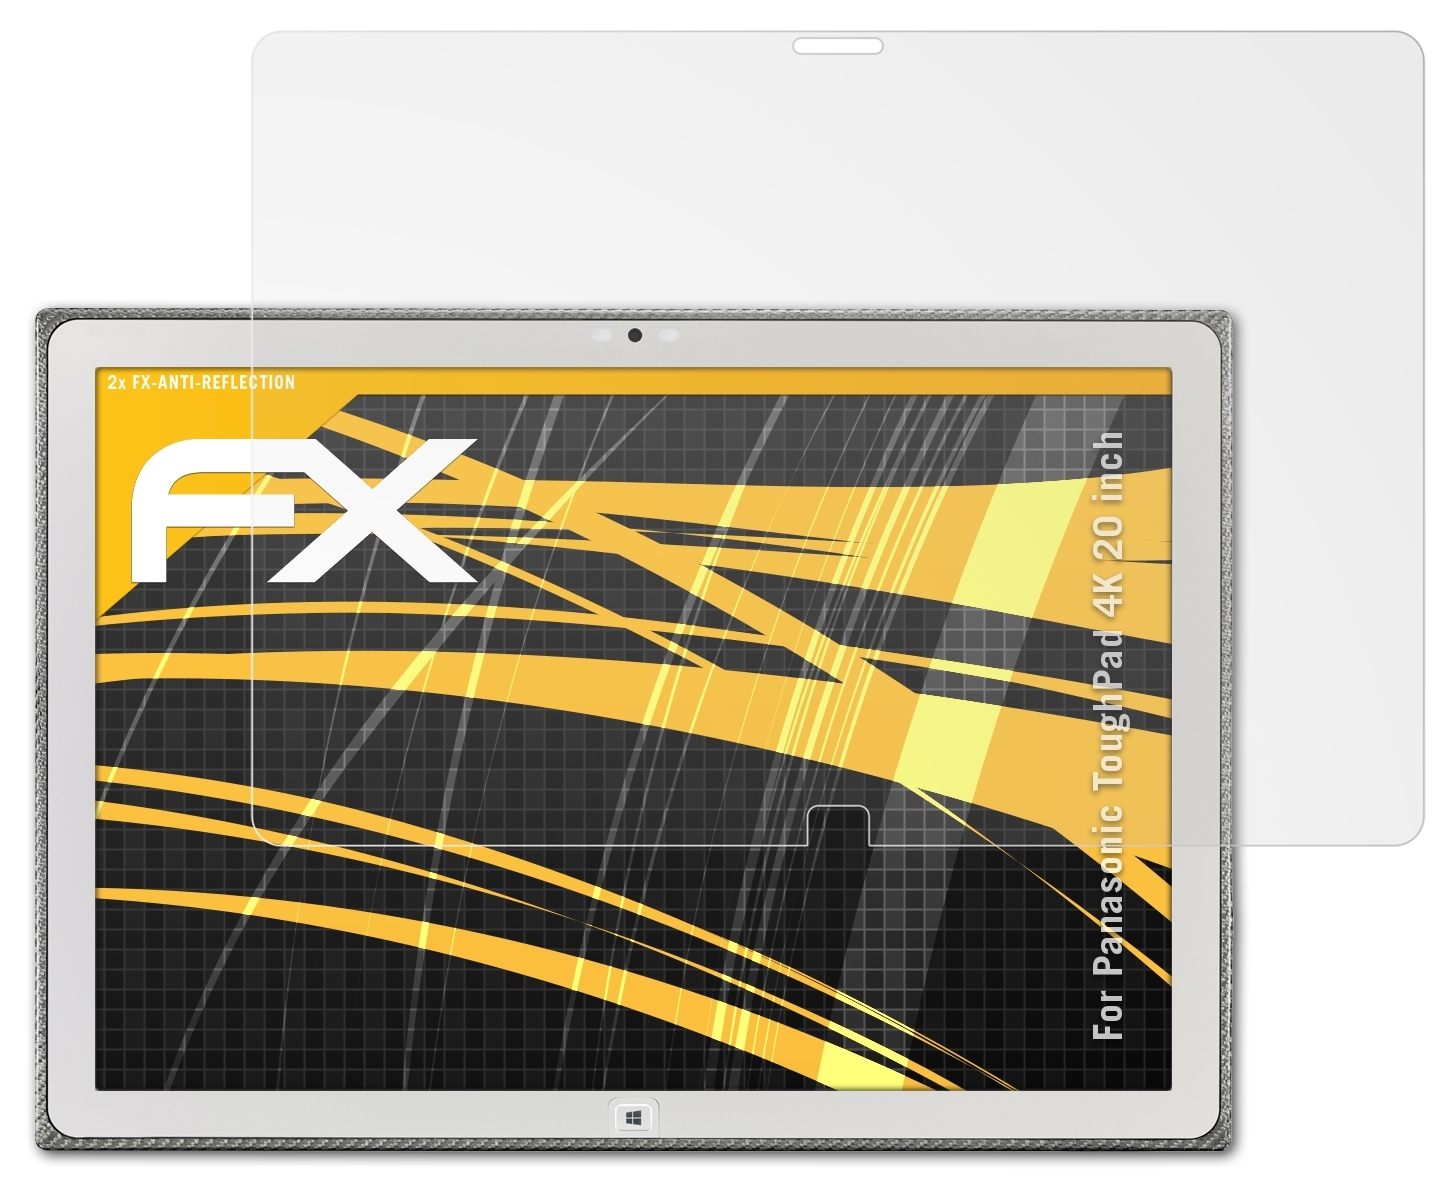 FX-Antireflex ATFOLIX (20 inch)) Panasonic 4K ToughPad Displayschutz(für 2x